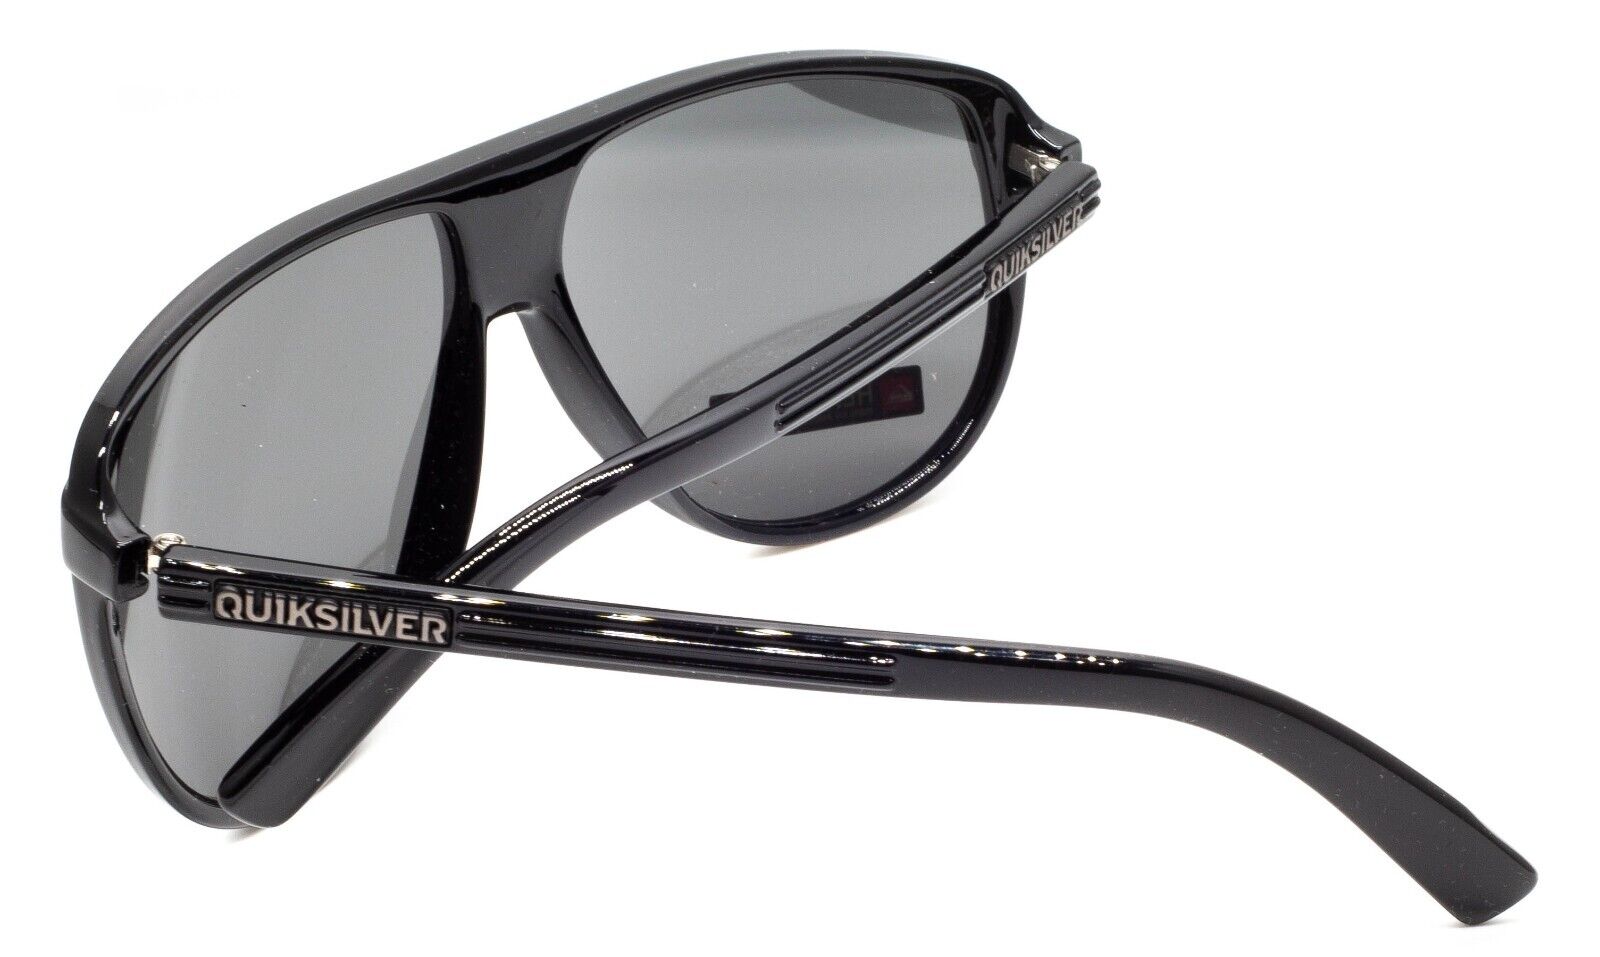 HEAT Eyewear Shades 4231441 - Sunglasses 59mm GGV -Italy QS1176 QUIKSILVER 229 Glasses Eyewear